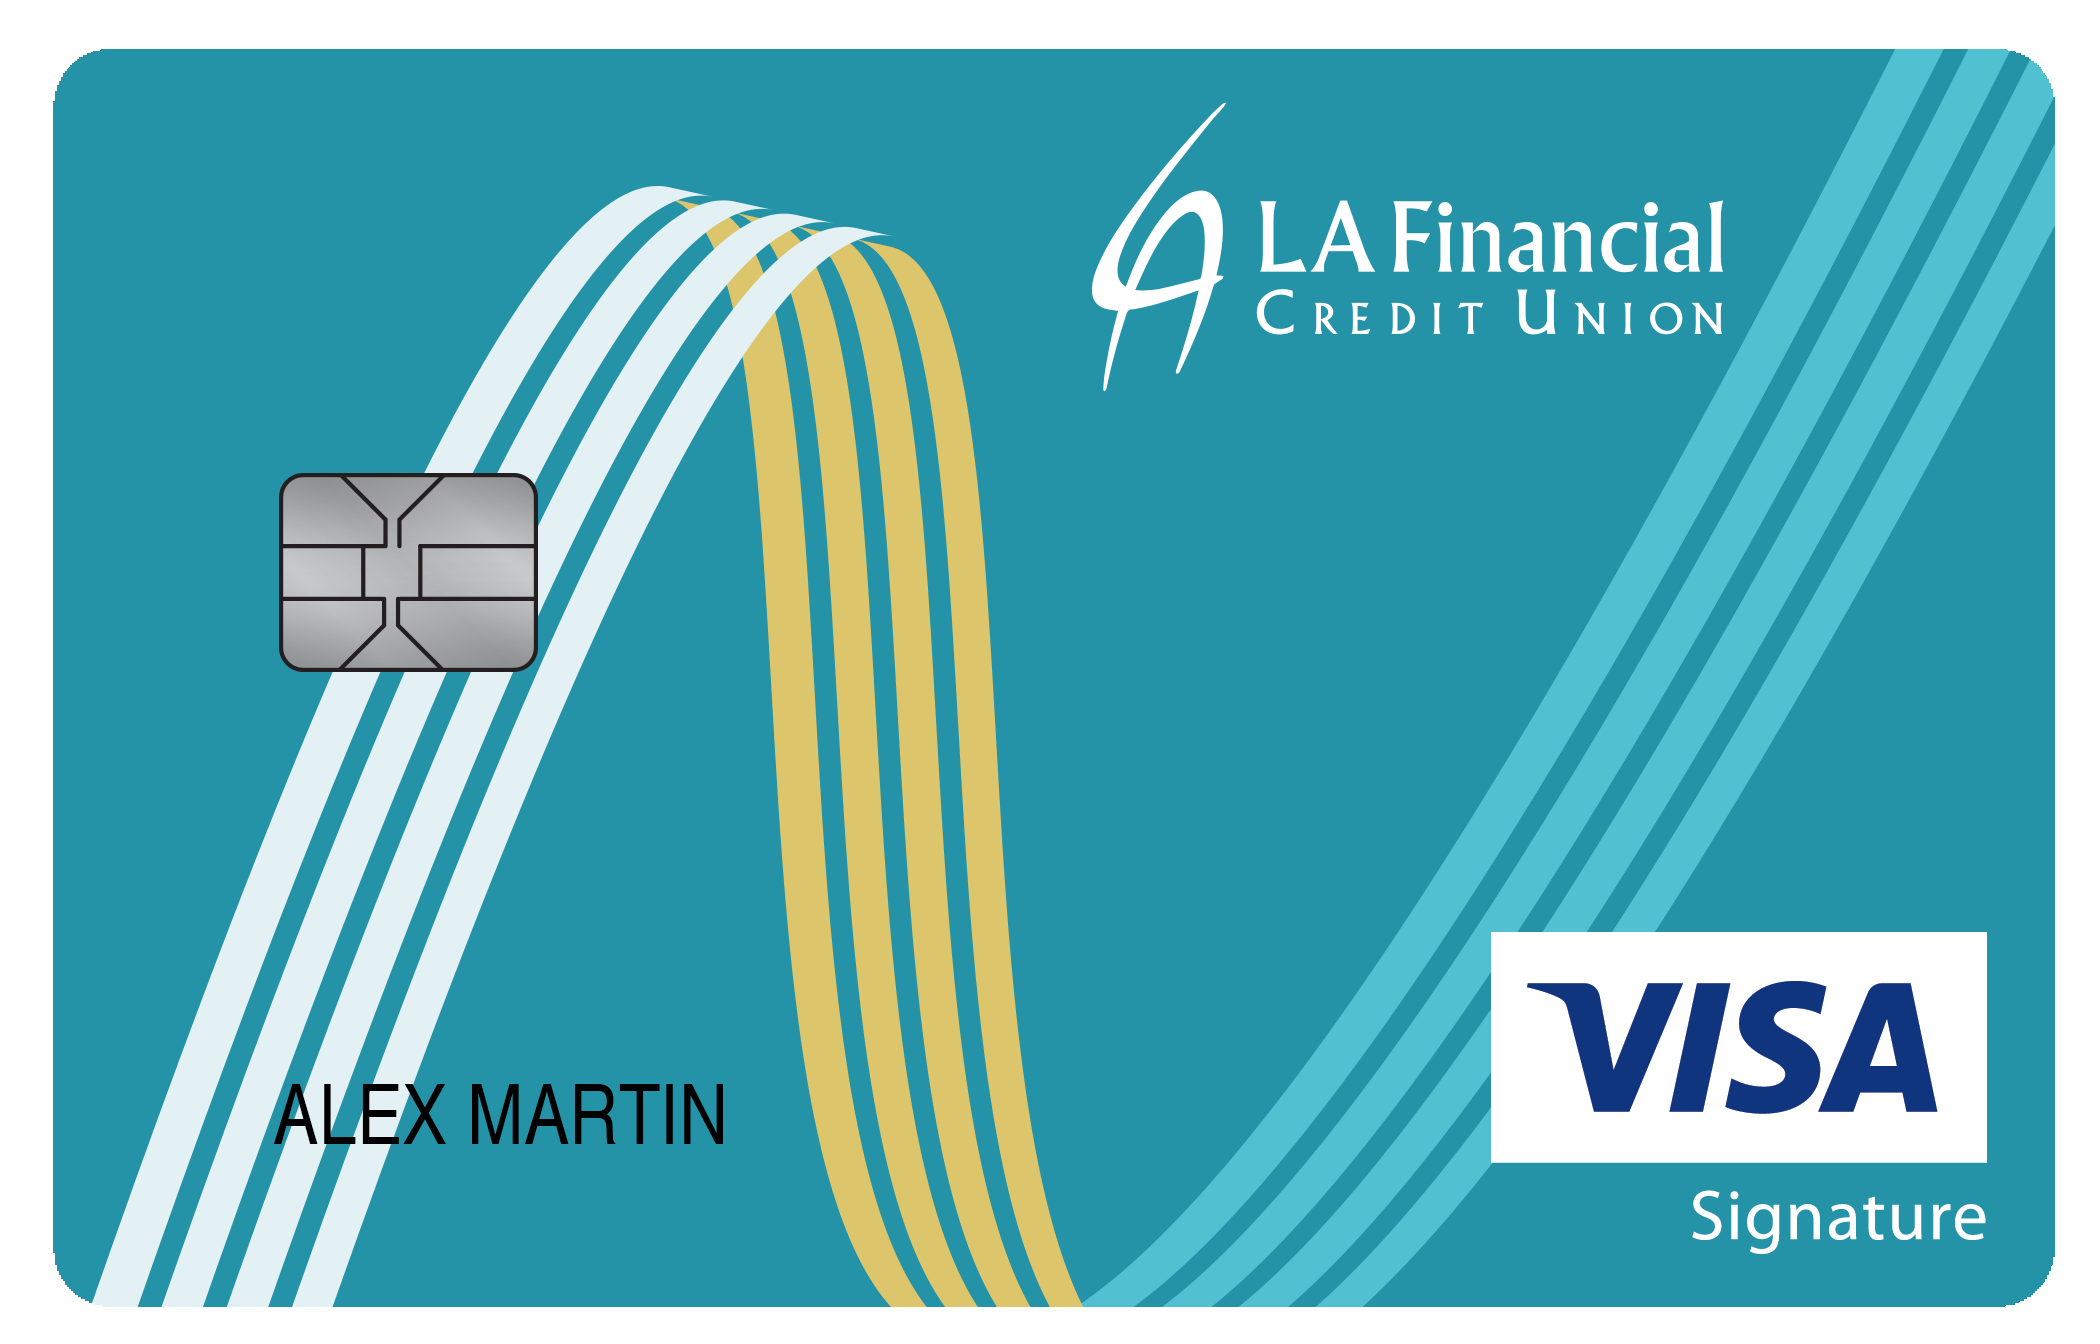 LA Financial Credit Union Travel Rewards+ Card